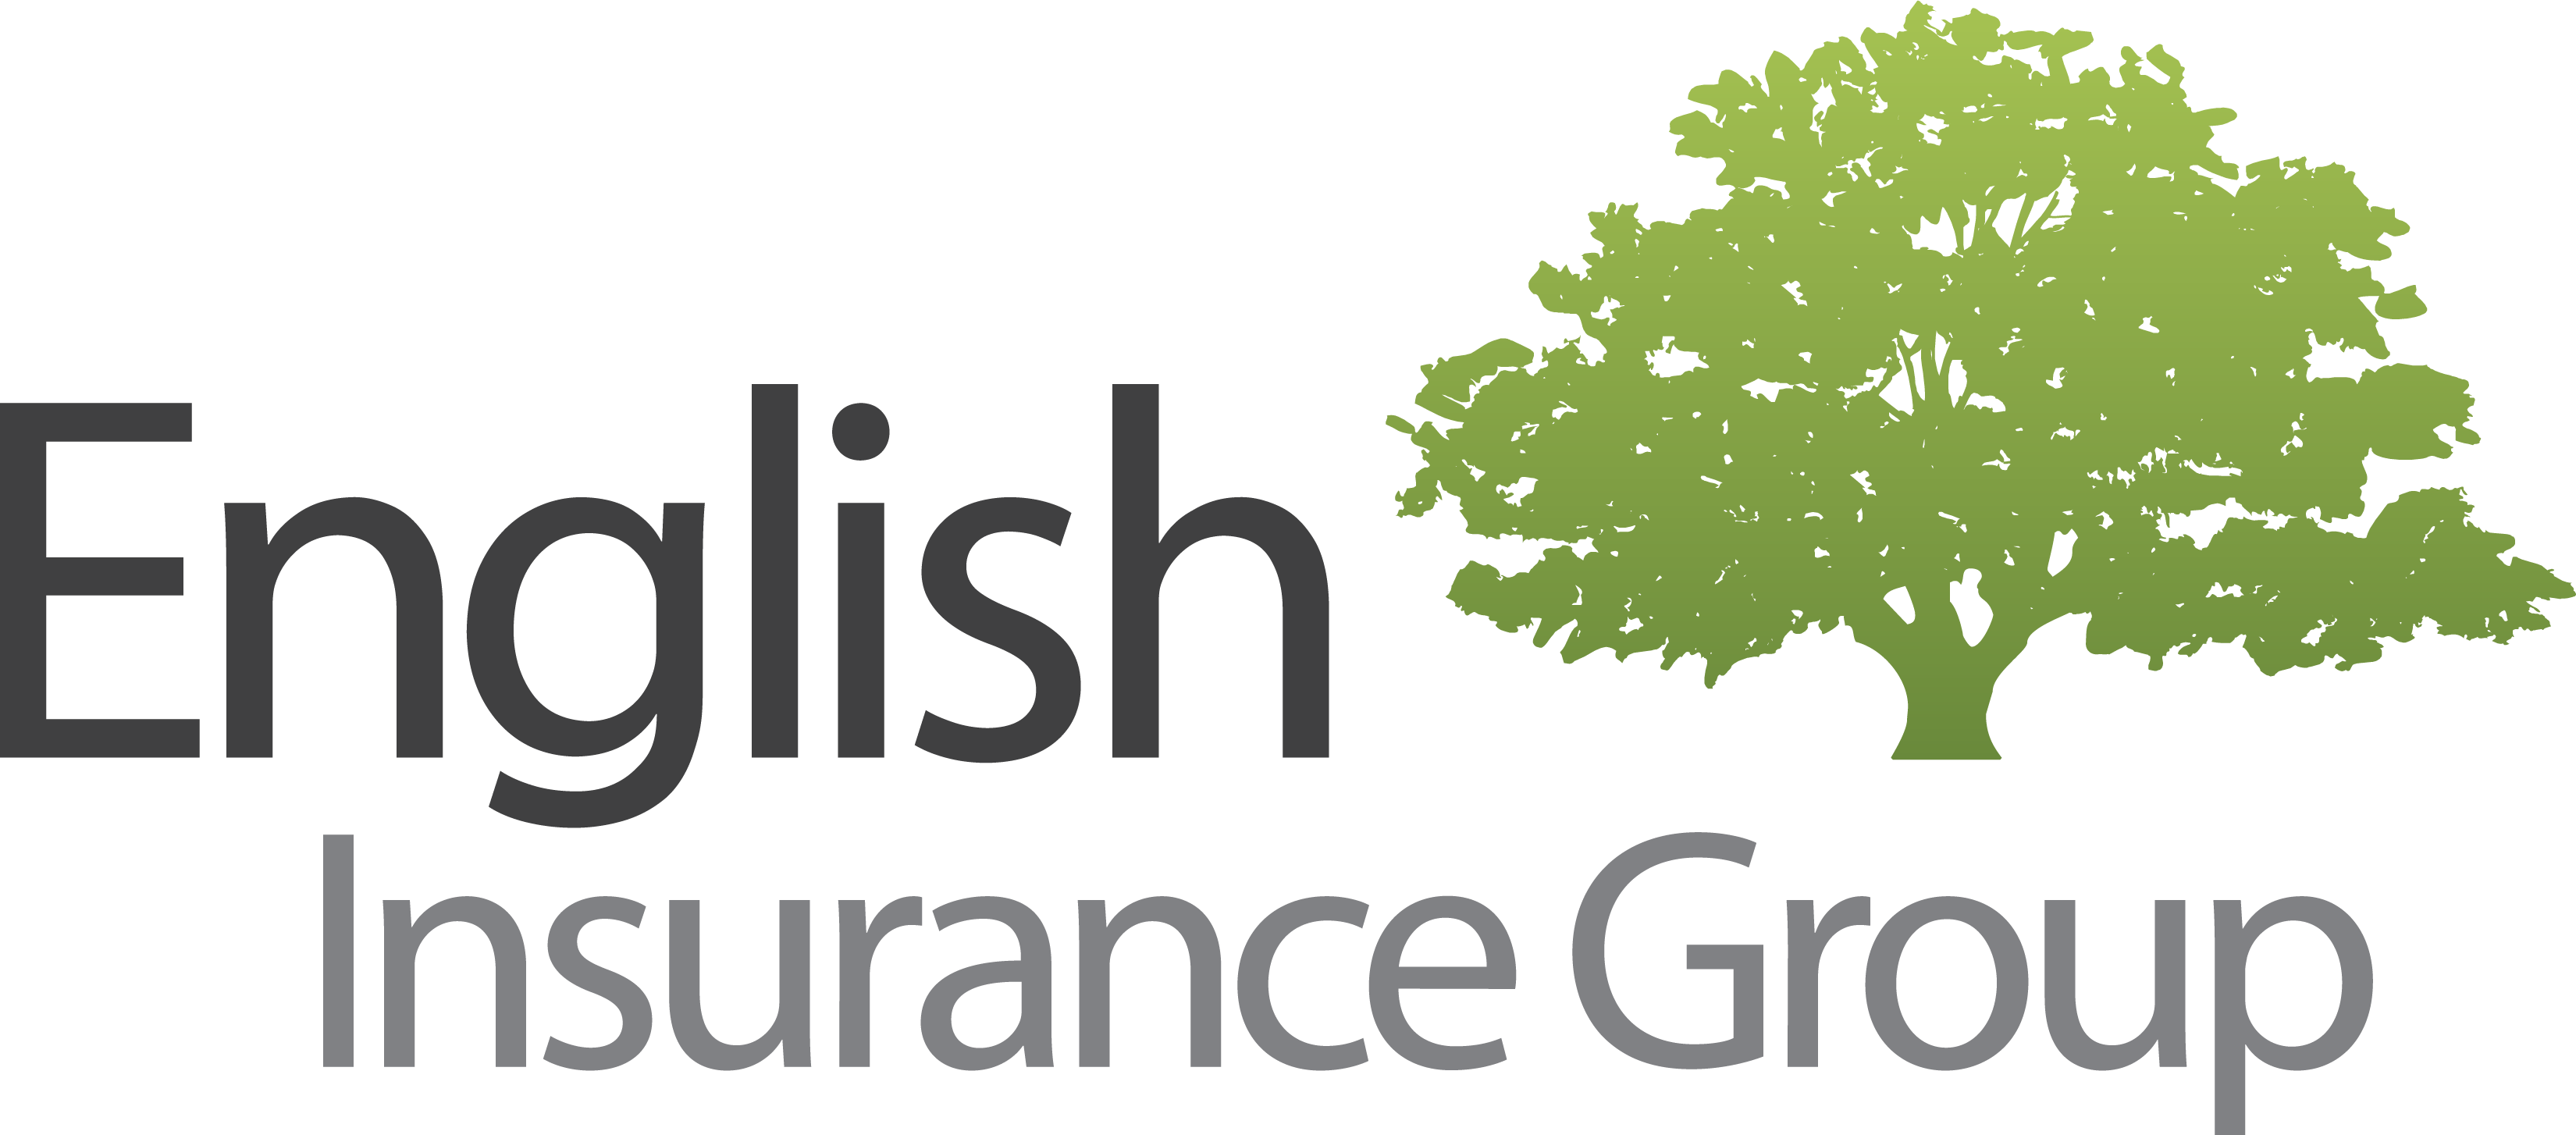 English Insurance Group